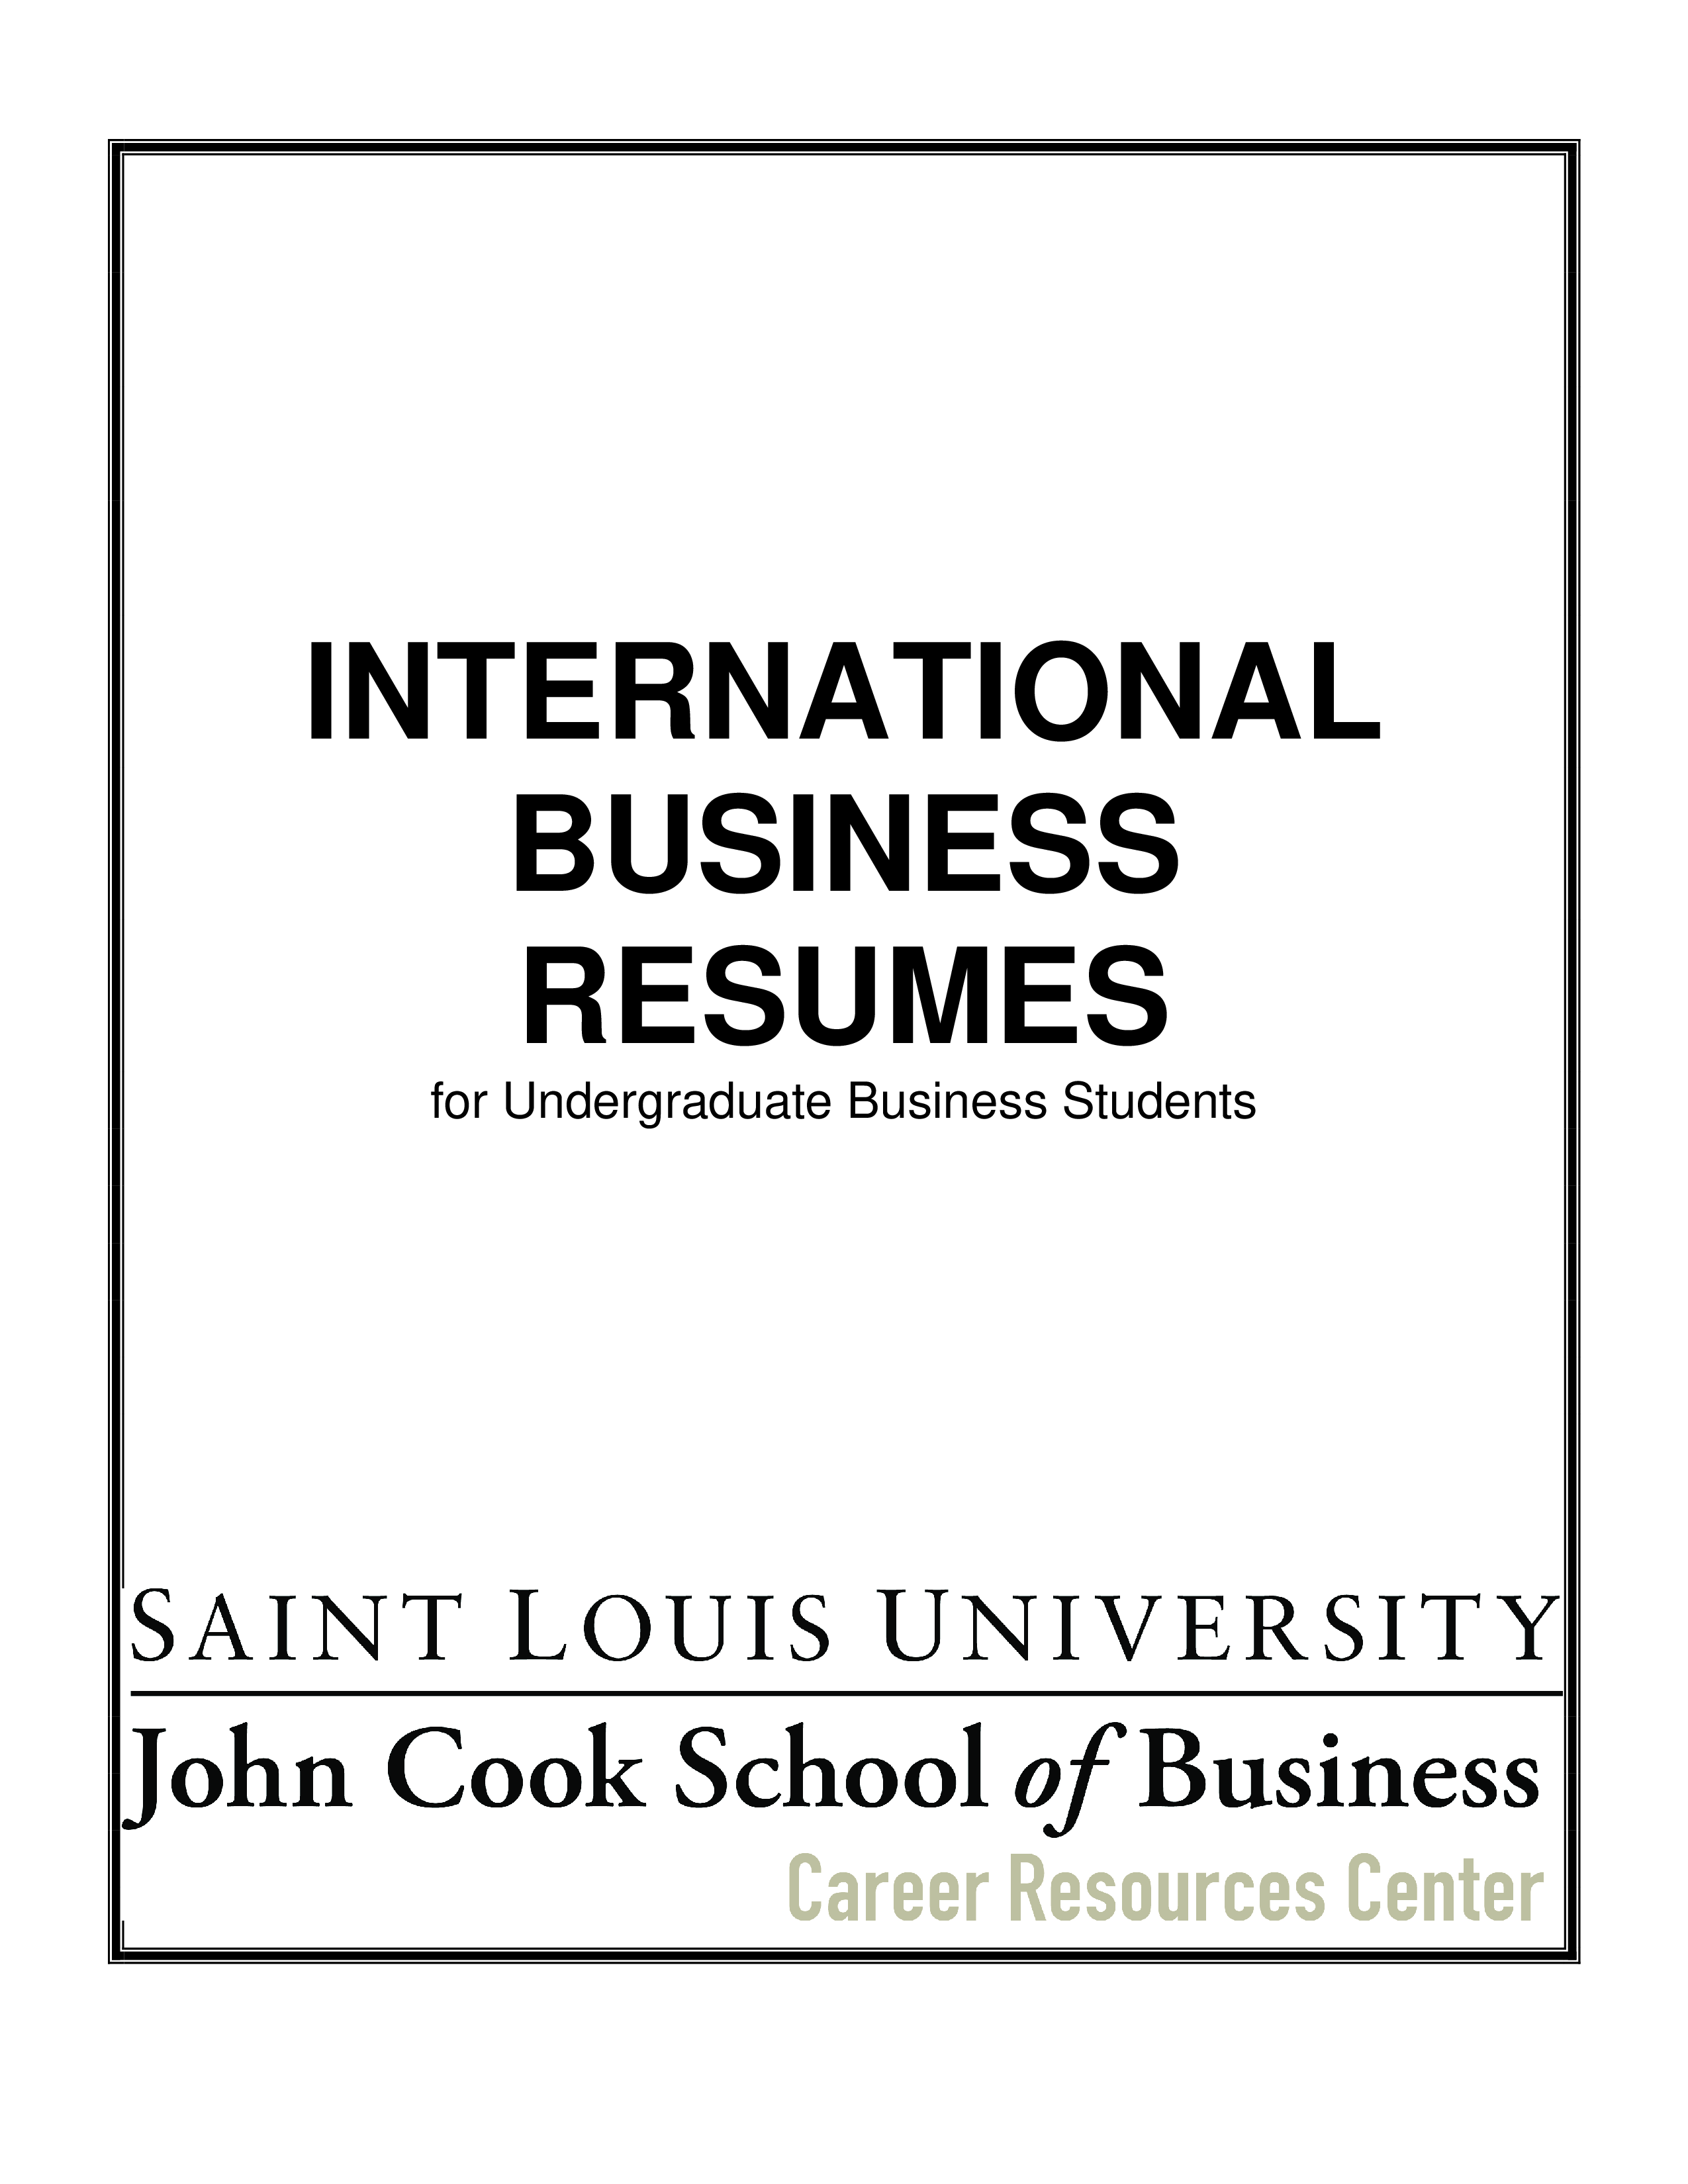 international business resume template